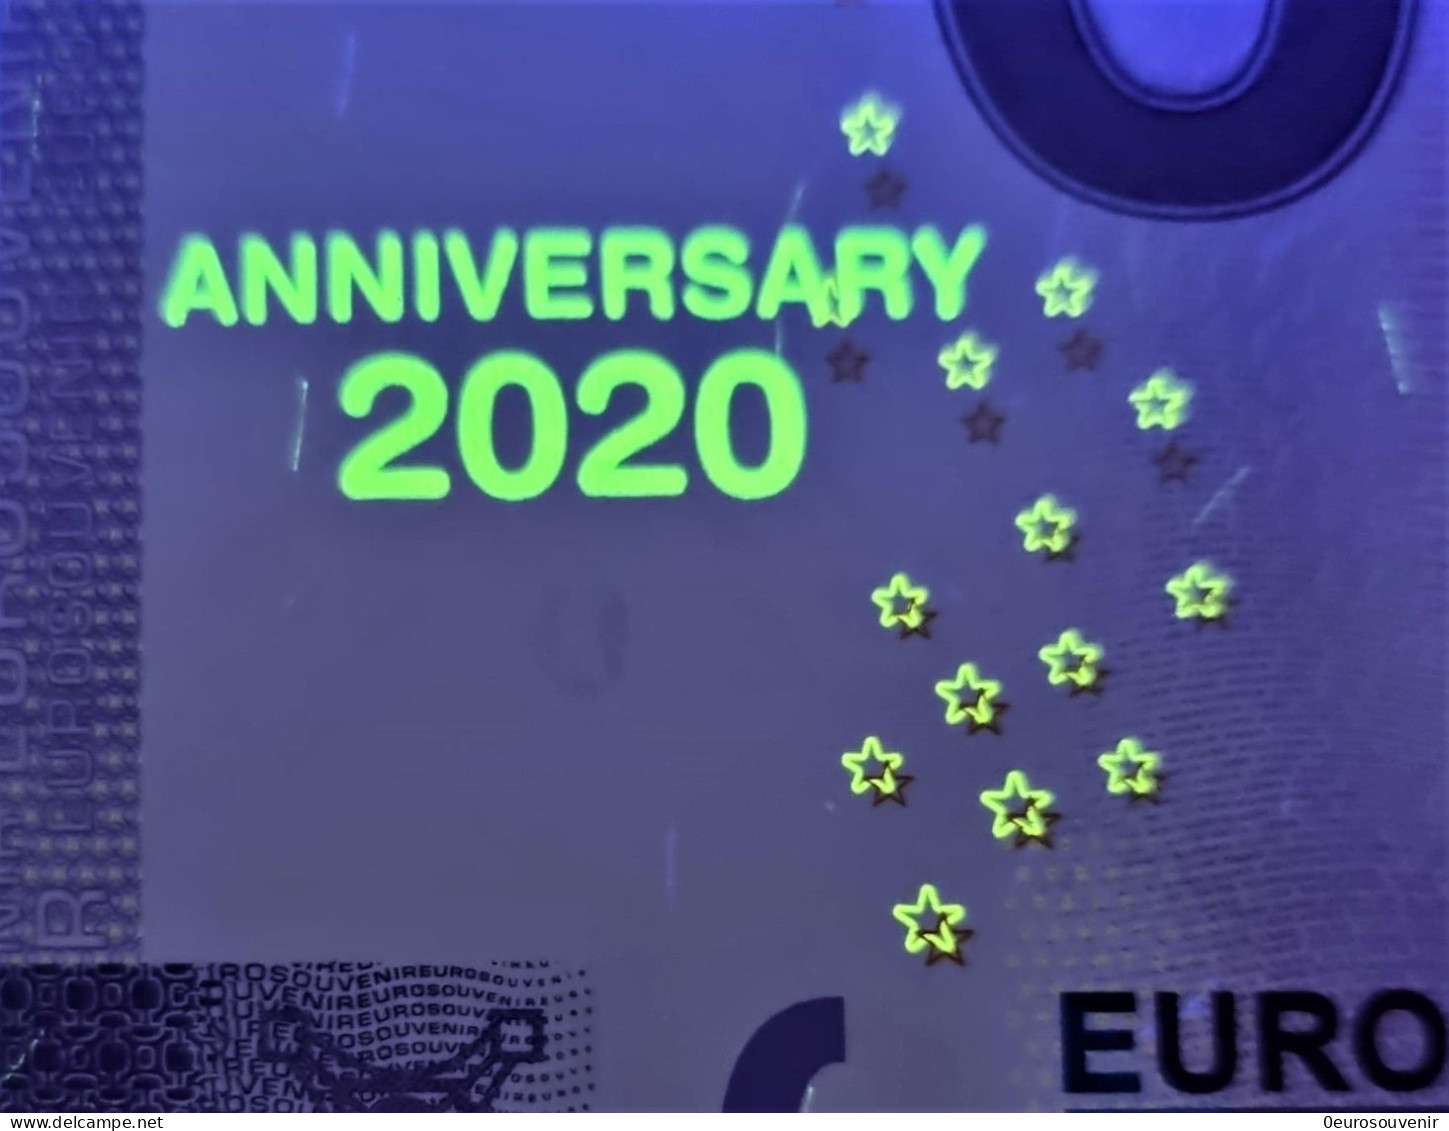 0-Euro XEBA 2020-3 SCHLOSS MARTINSKIRCHEN - STADT MÜHLBERG Set NORMAL+ANNIVERSARY - Privatentwürfe